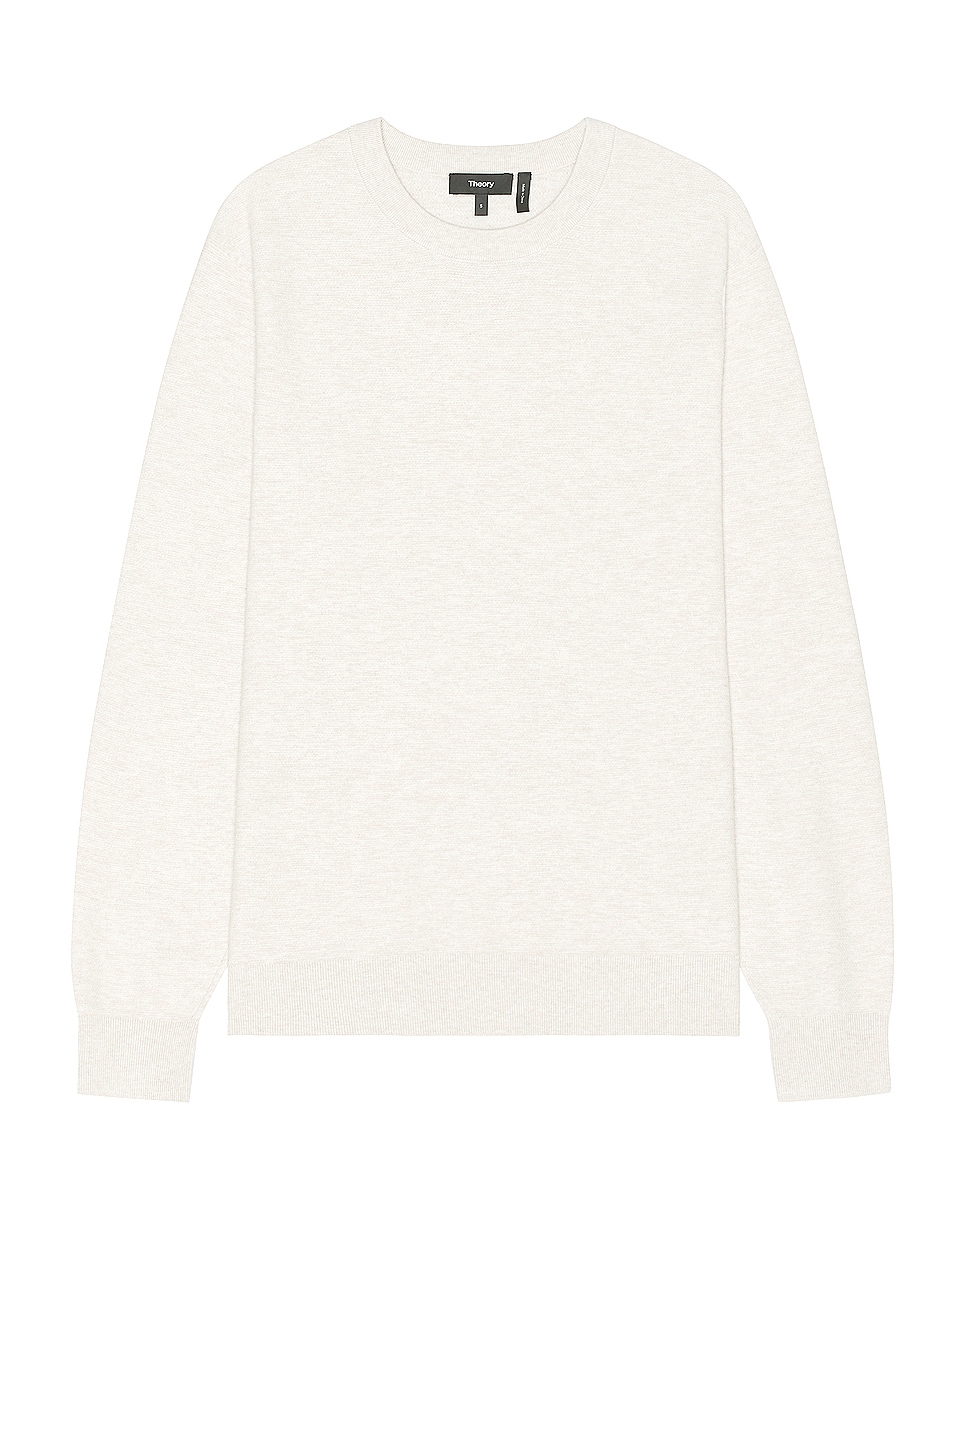 Image 1 of Theory Riland Crew Sweater in Melange Ivory